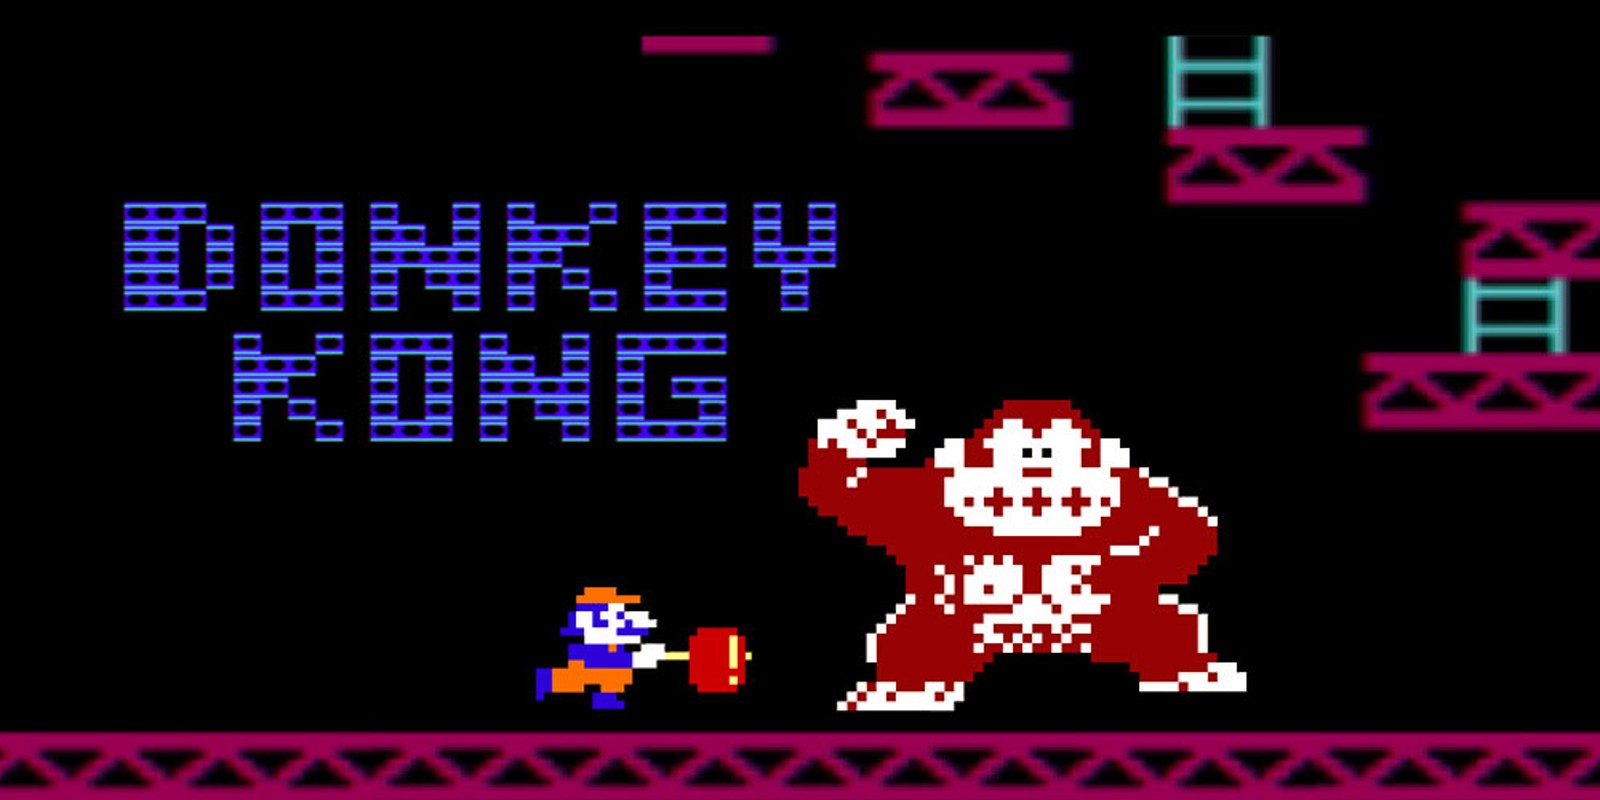 Donkey kong arcade game rom